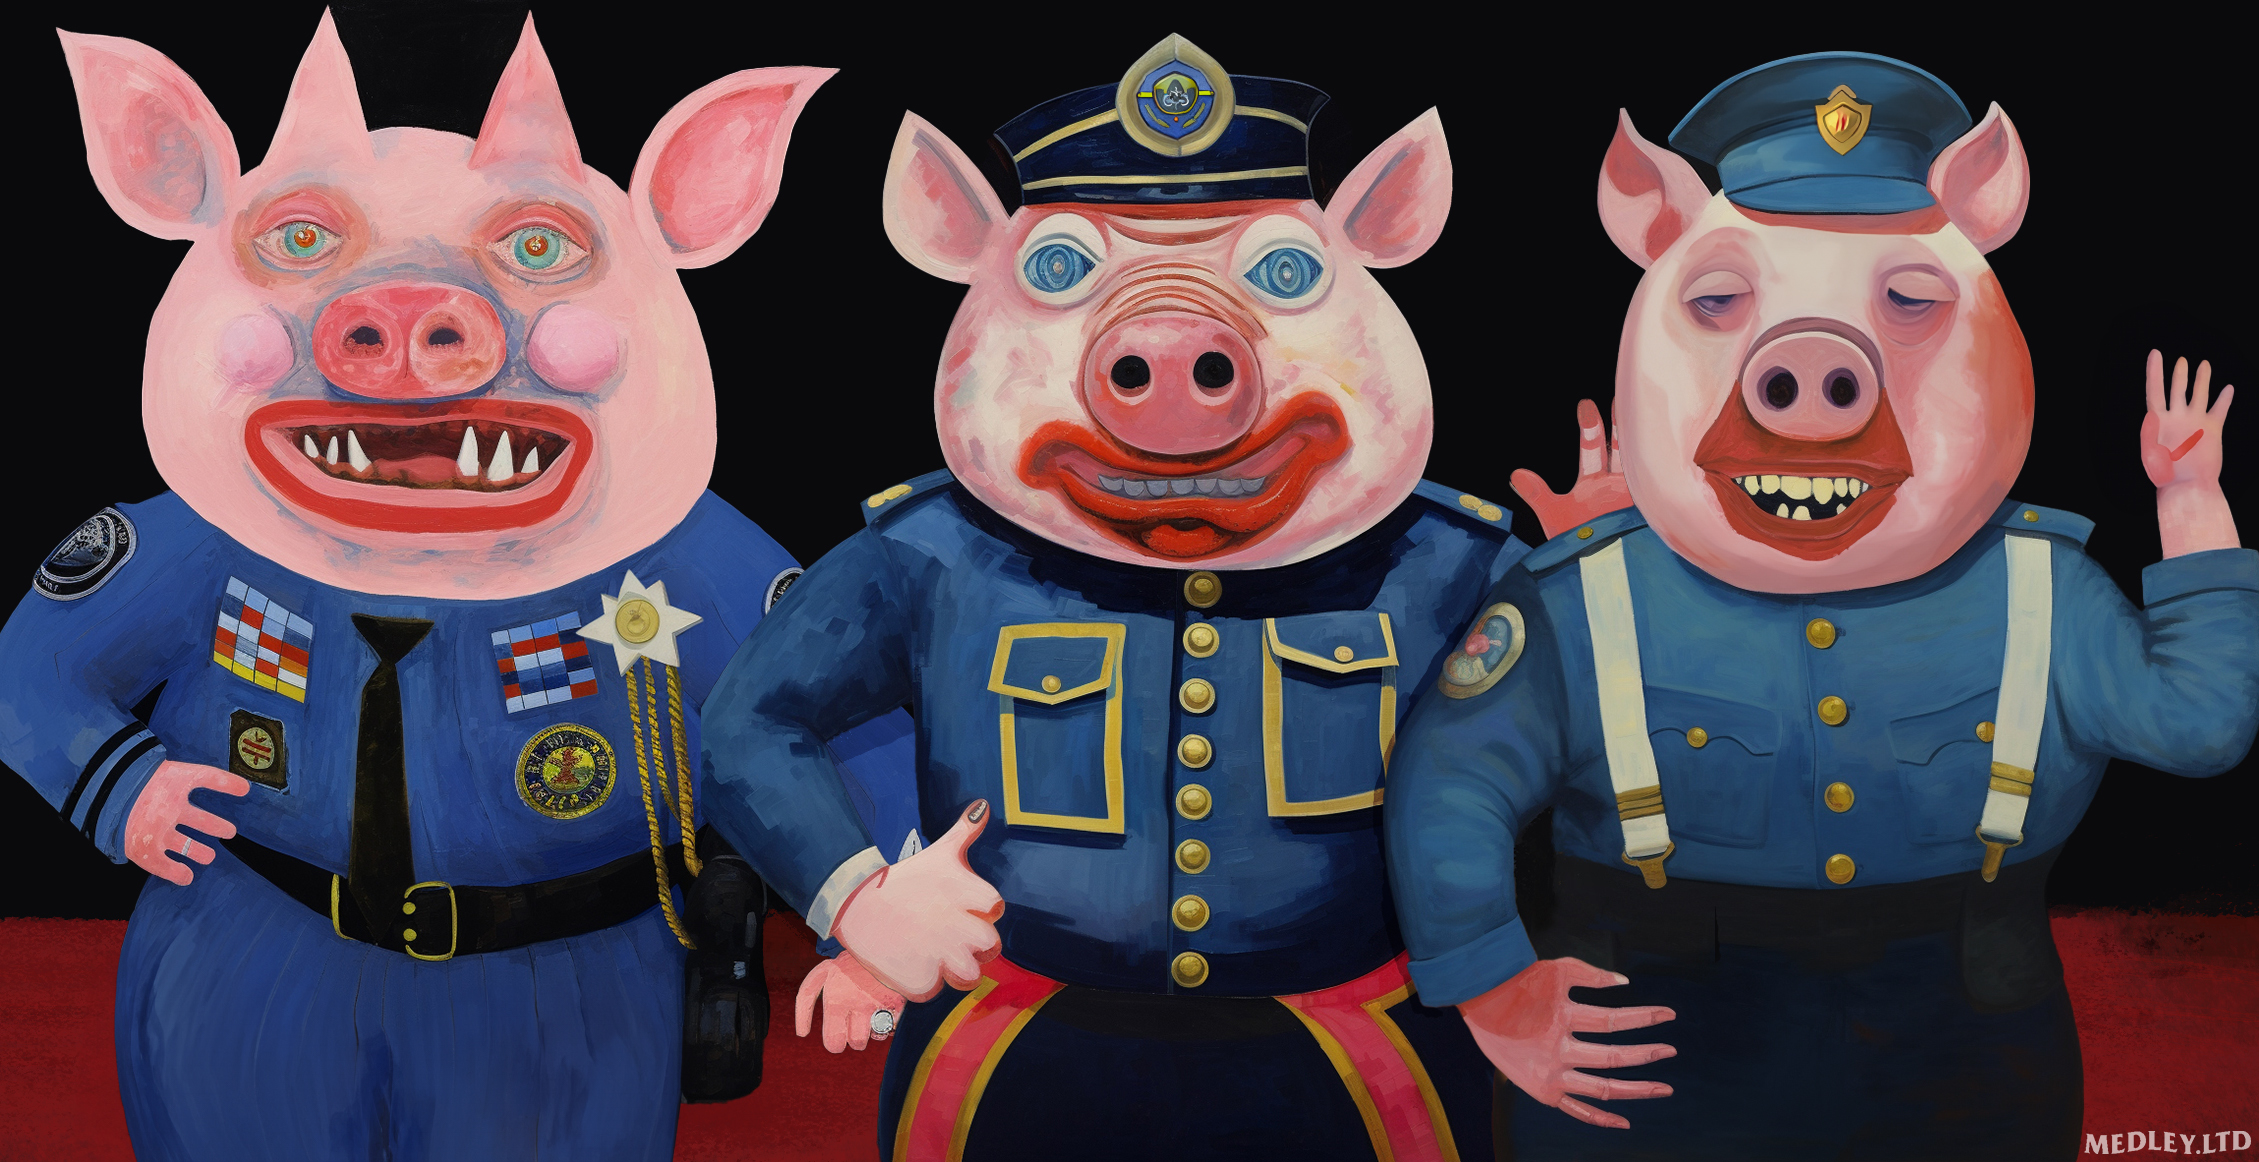 Painting of three little police piggies by artist Matt Medley.